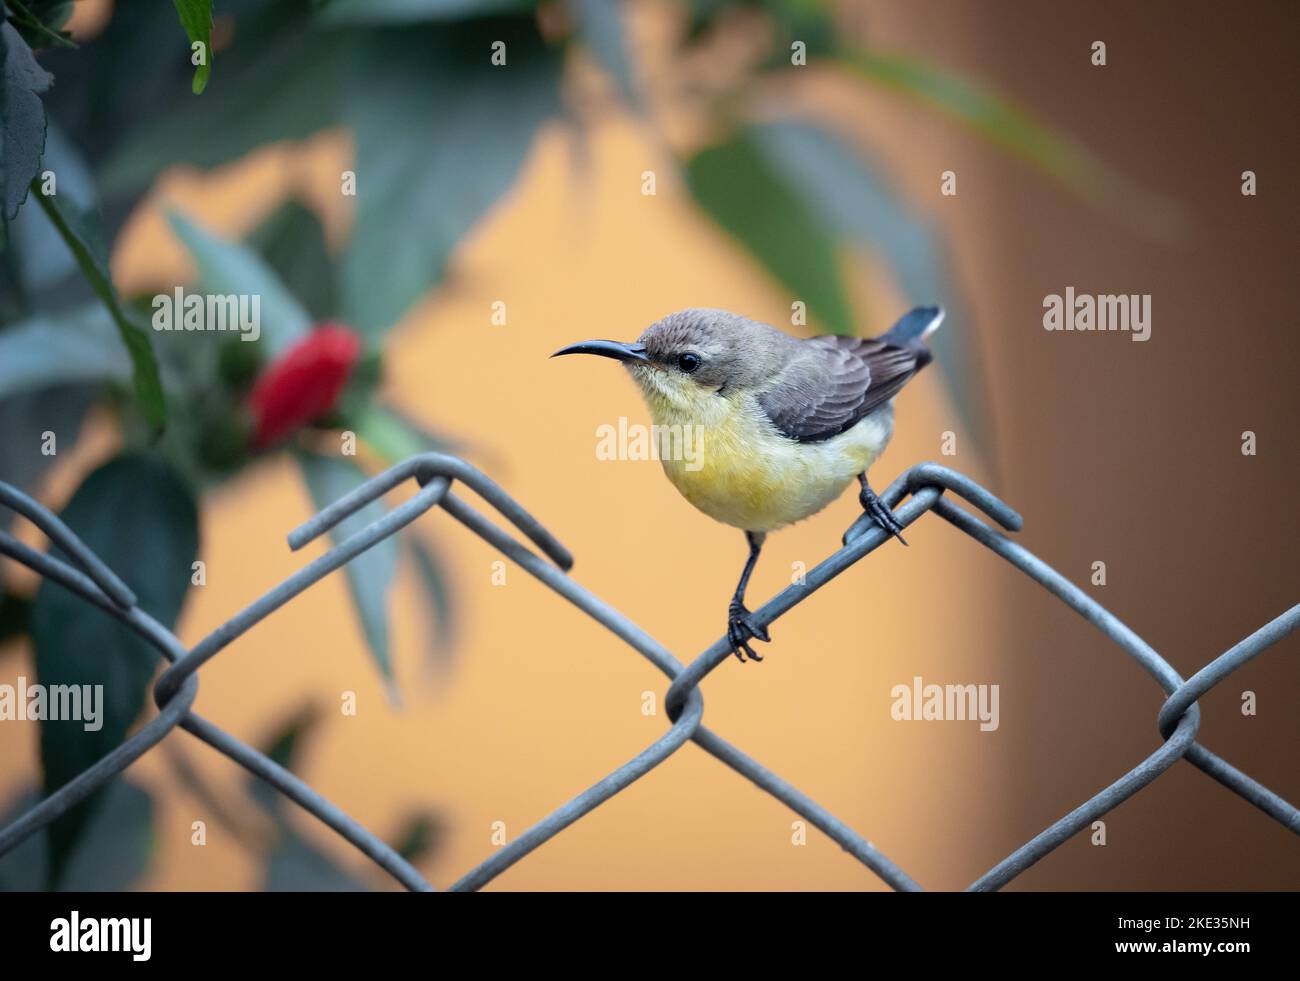 Un Sunbird viola femmina seduto su una recinzione in rete metallica. Foto Stock